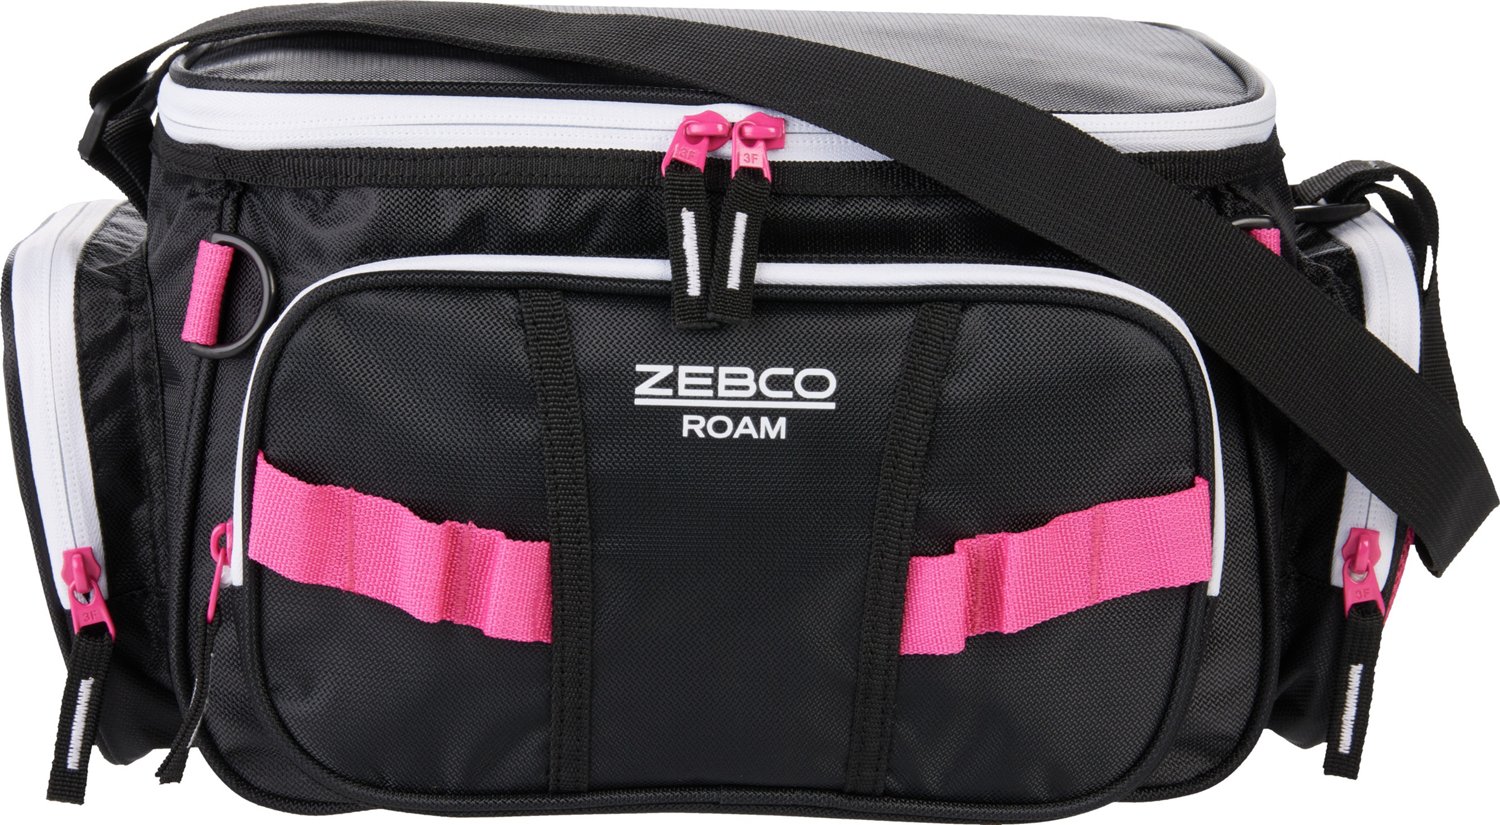 Zebco Roam Series Utility Tackle Bag